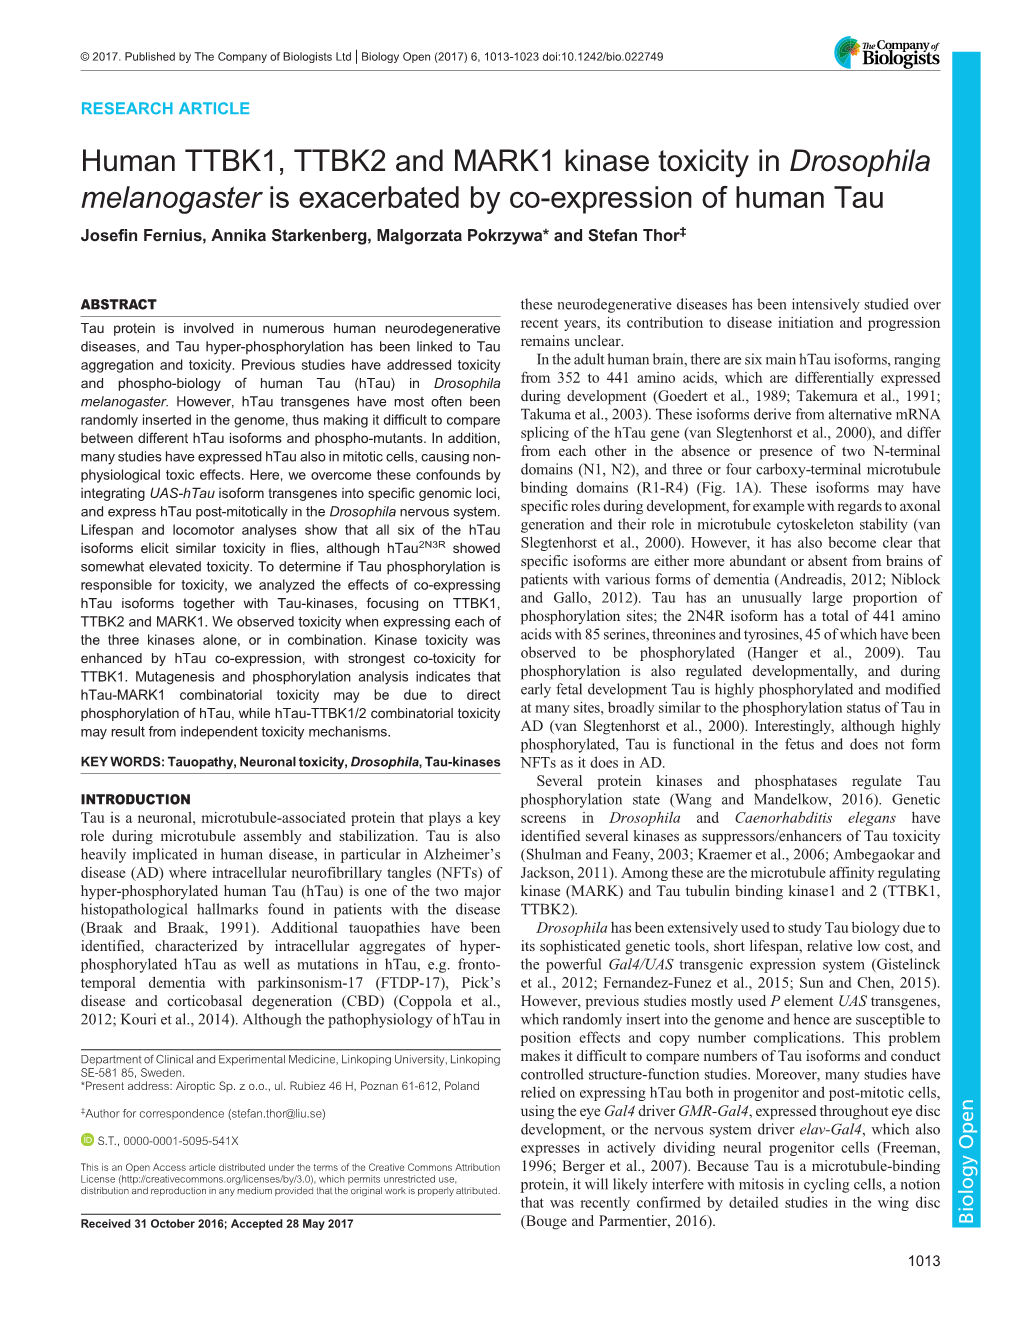 Human TTBK1, TTBK2 and MARK1 Kinase Toxicity in Drosophila